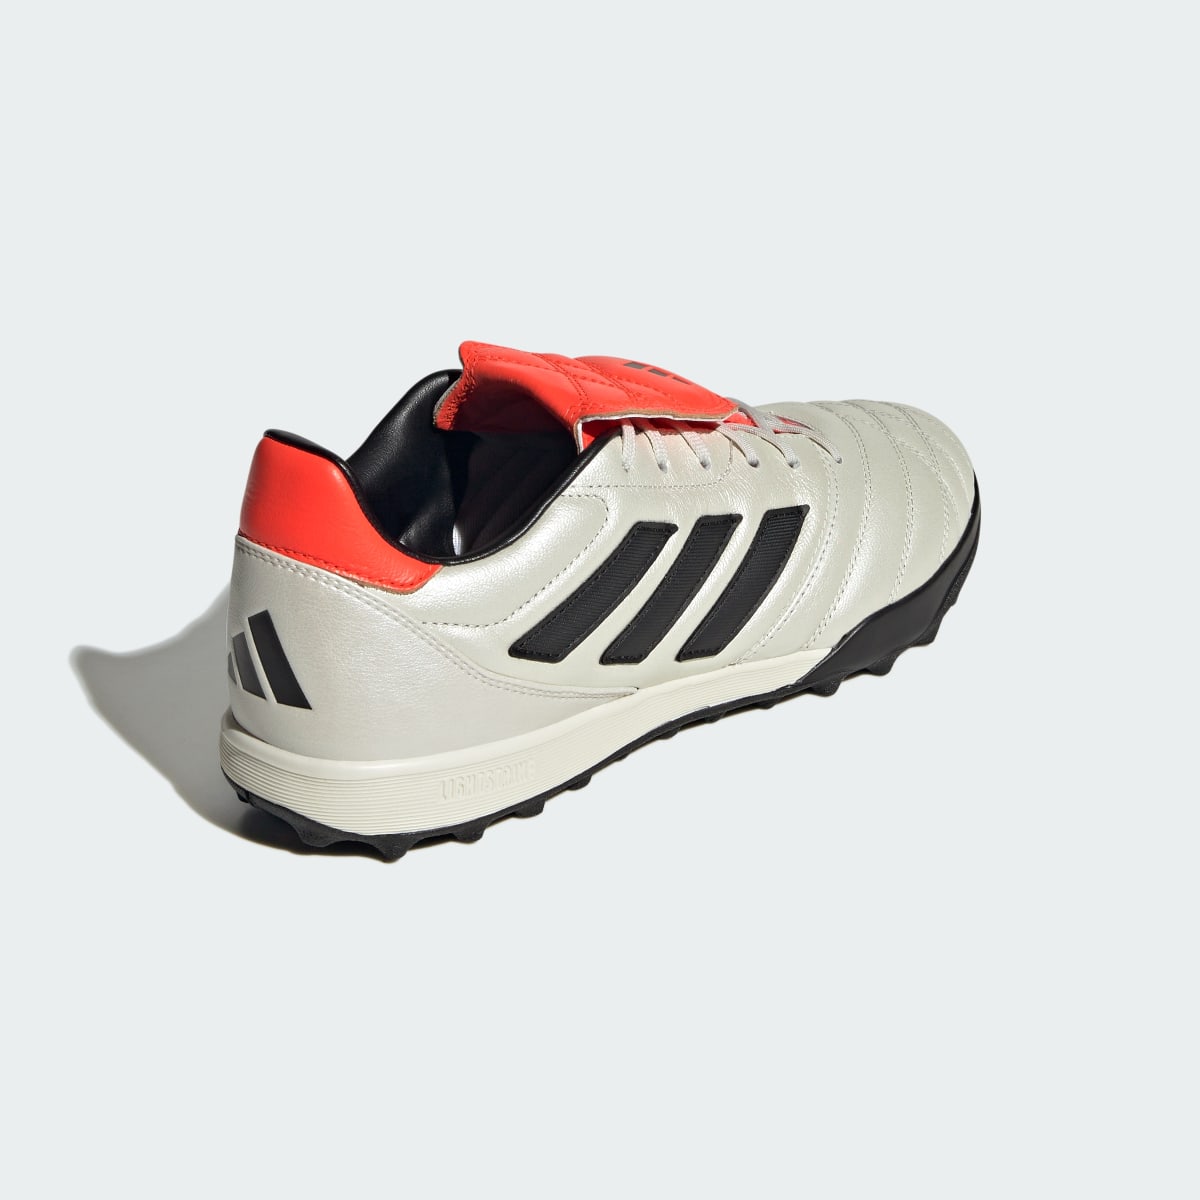 Adidas Copa Gloro Turf Boots. 6